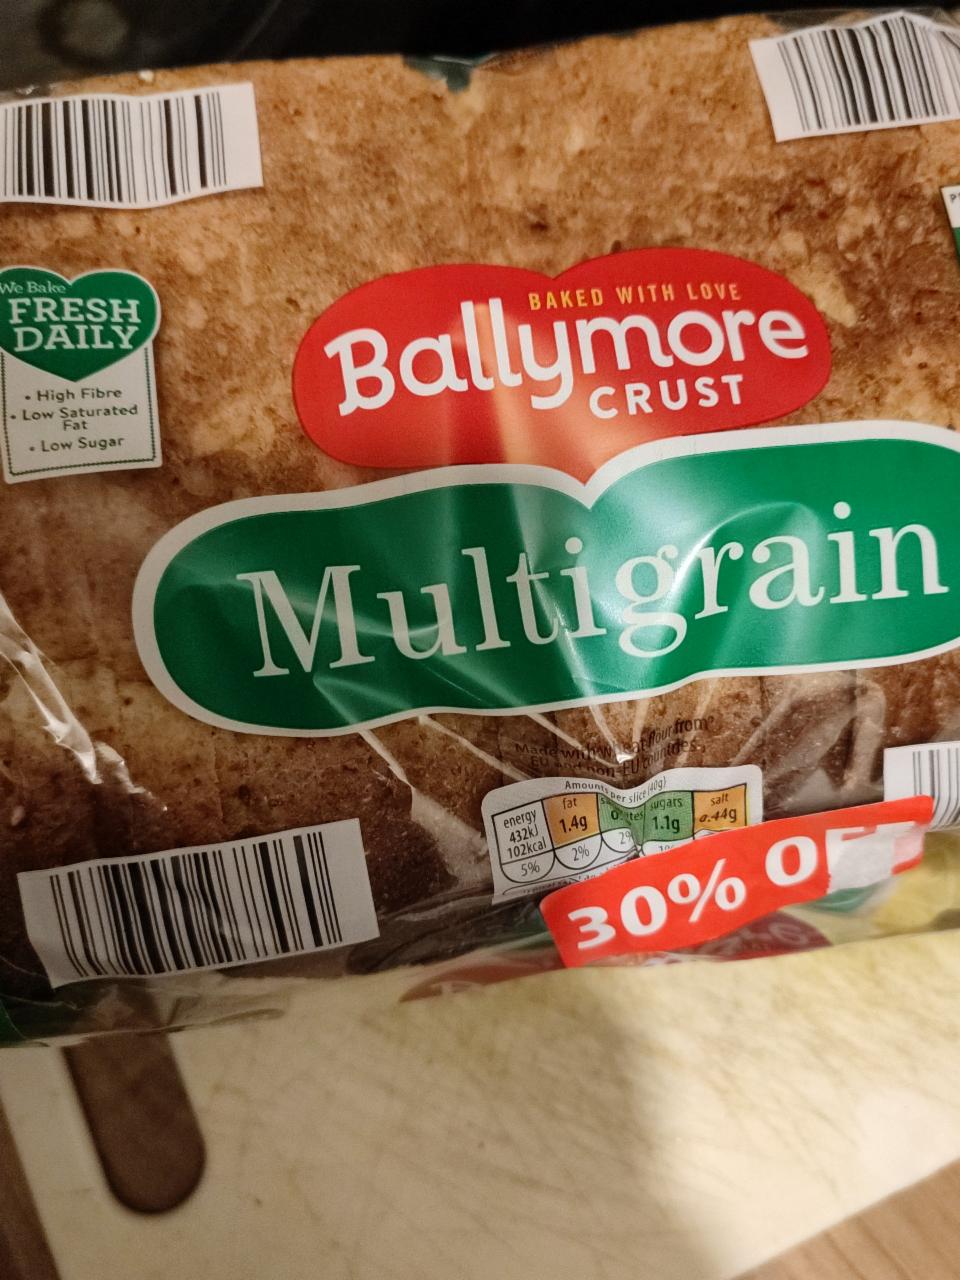 Fotografie - Multigrain Ballymore Crust